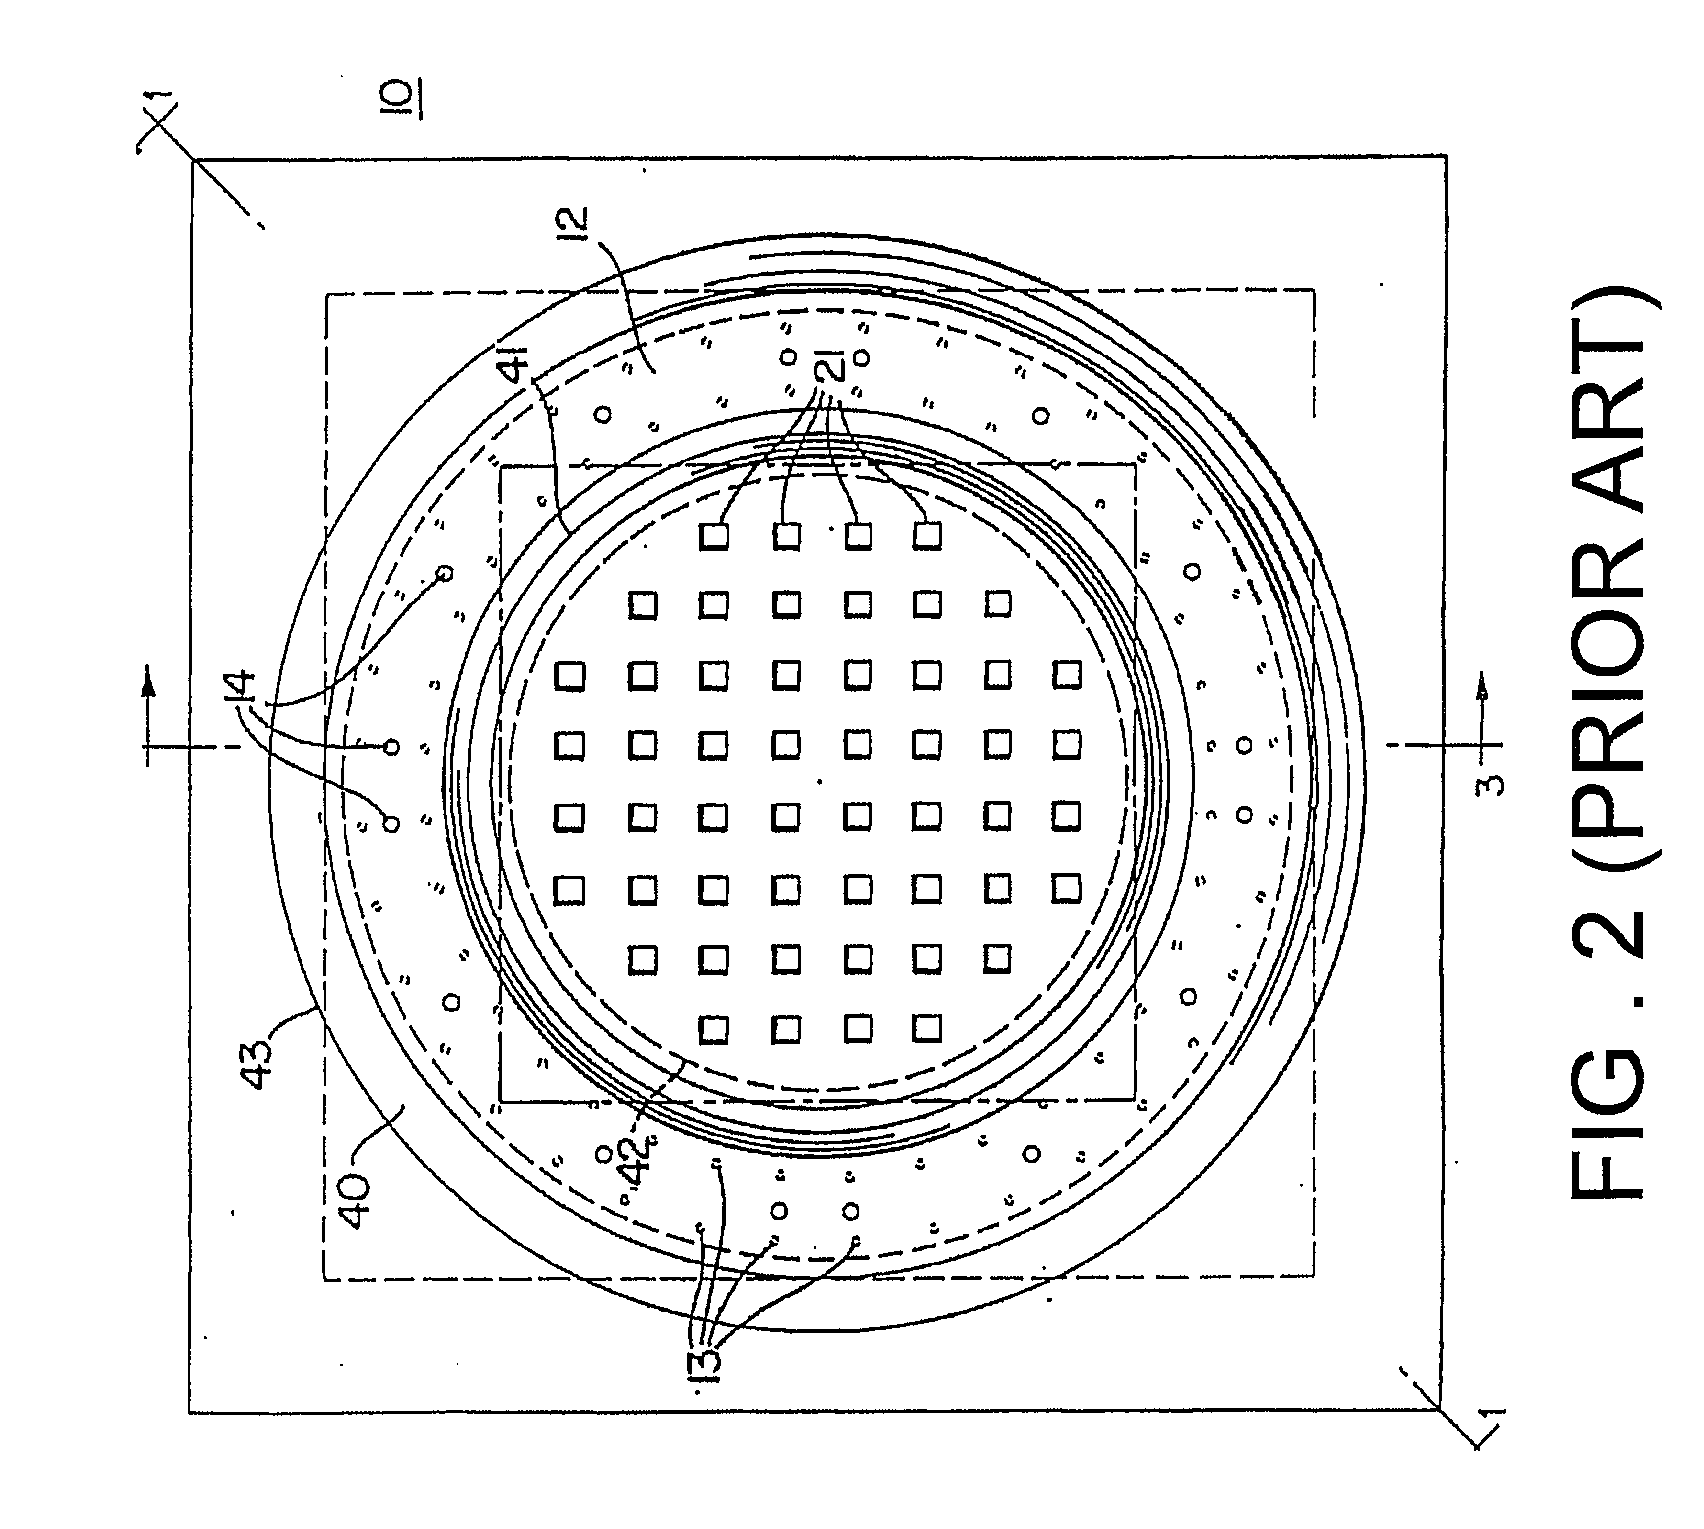 Miniature acoustic transducer